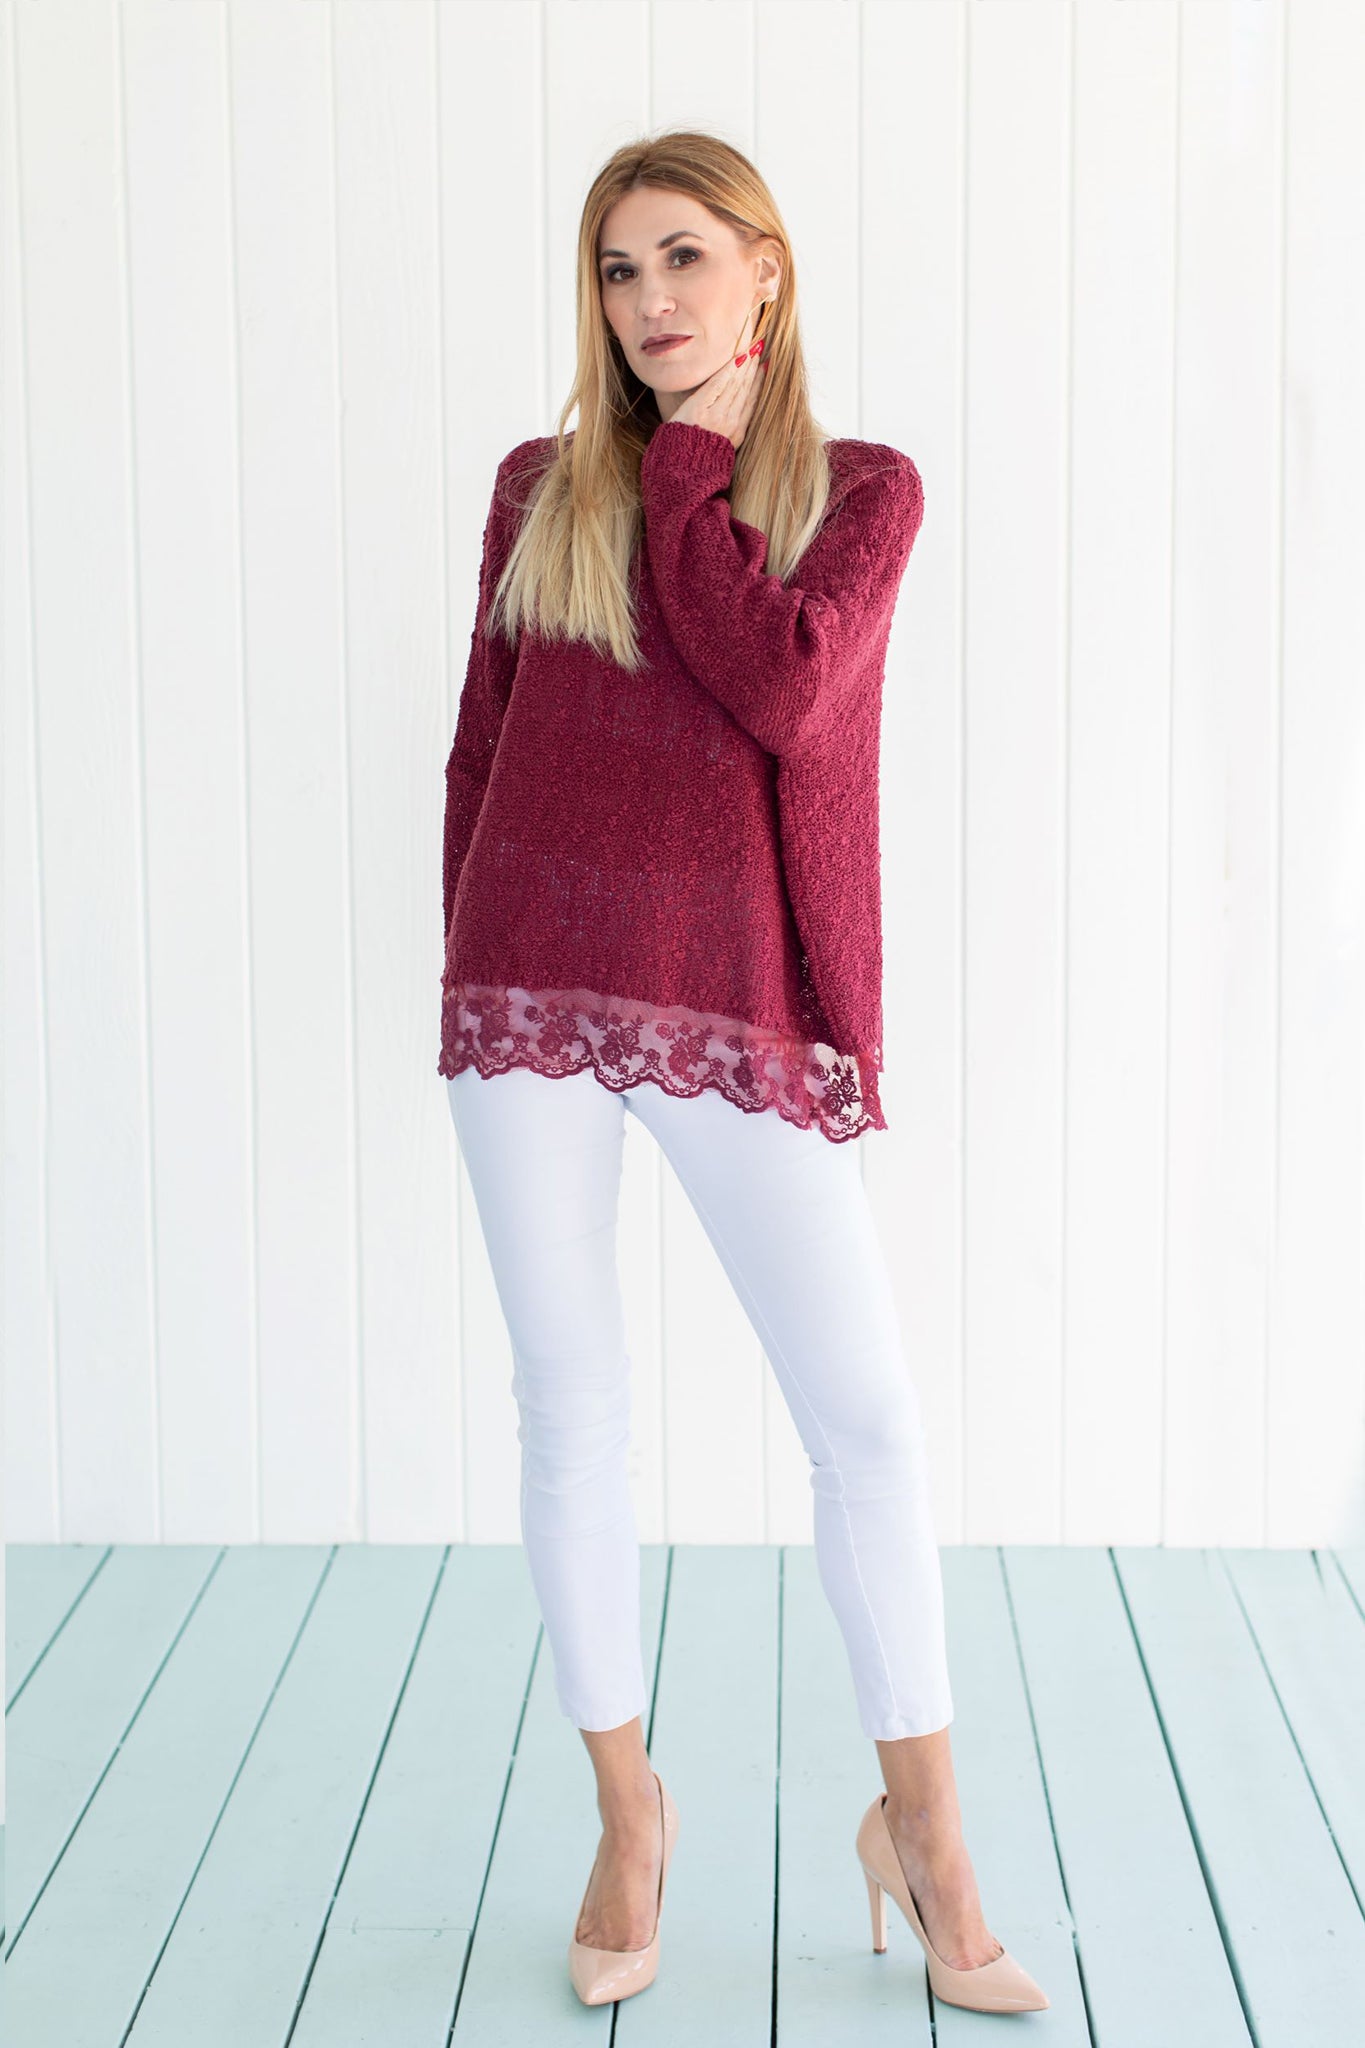 Lace Sweater Napa Tops jeanpierreklifa.com   